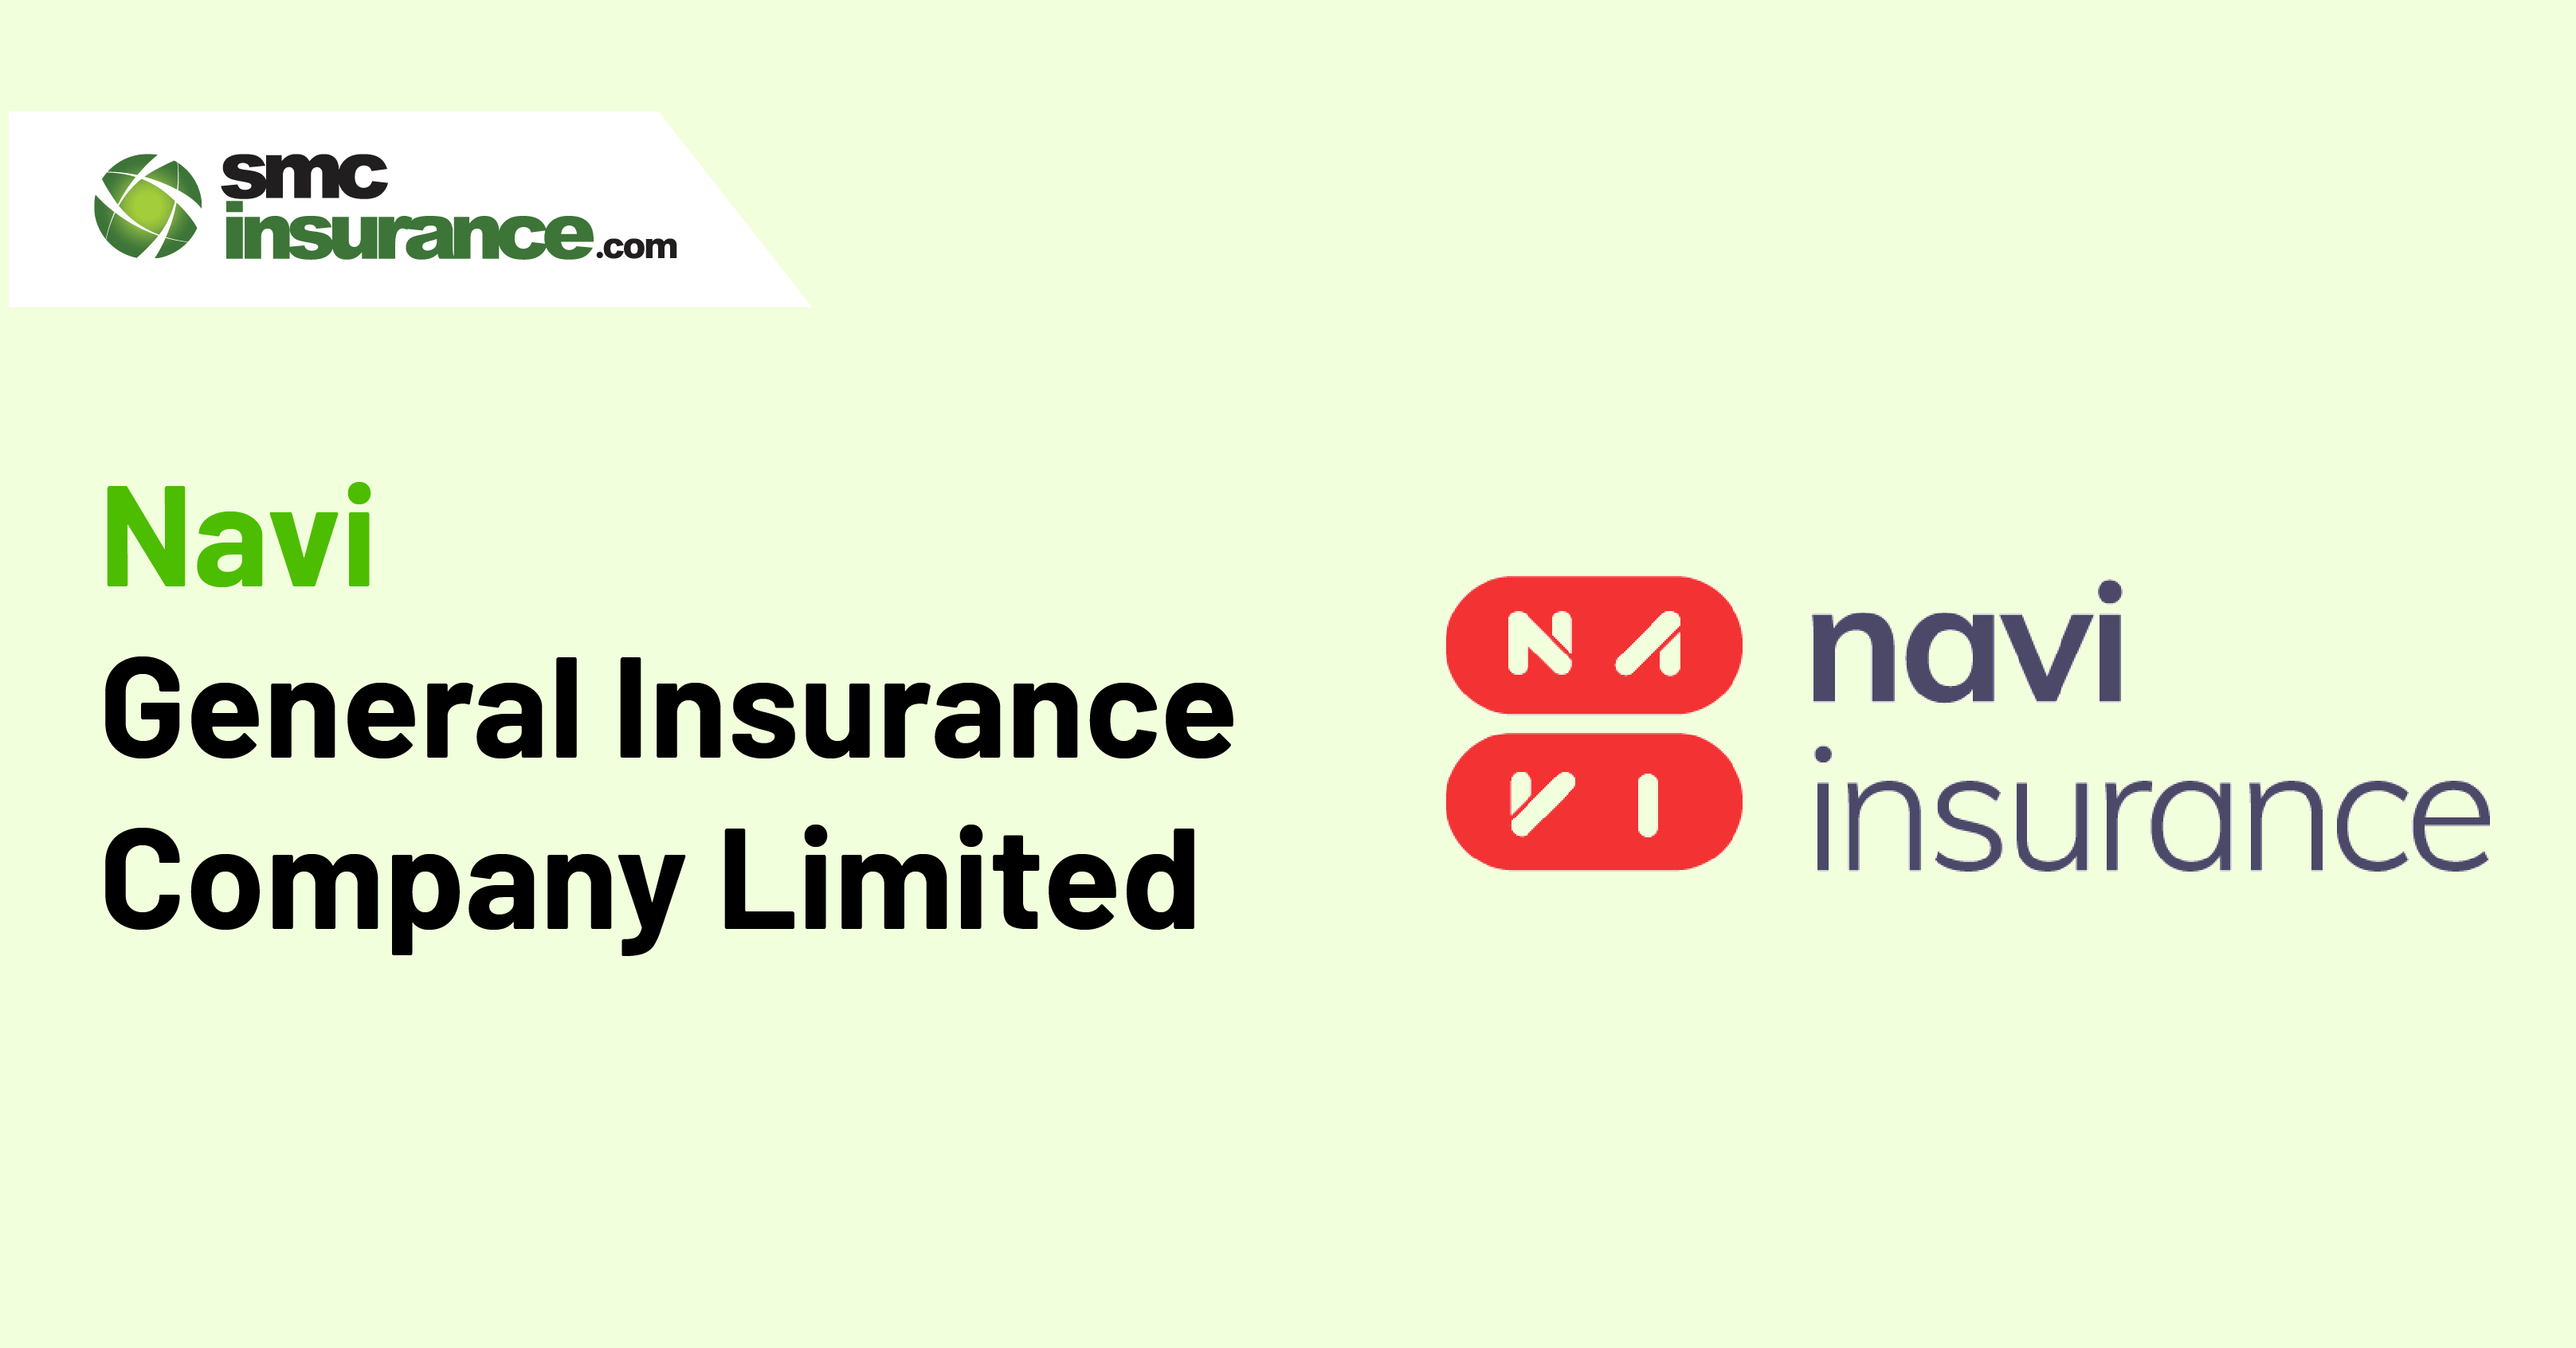 Navi General Insurance Company Limited